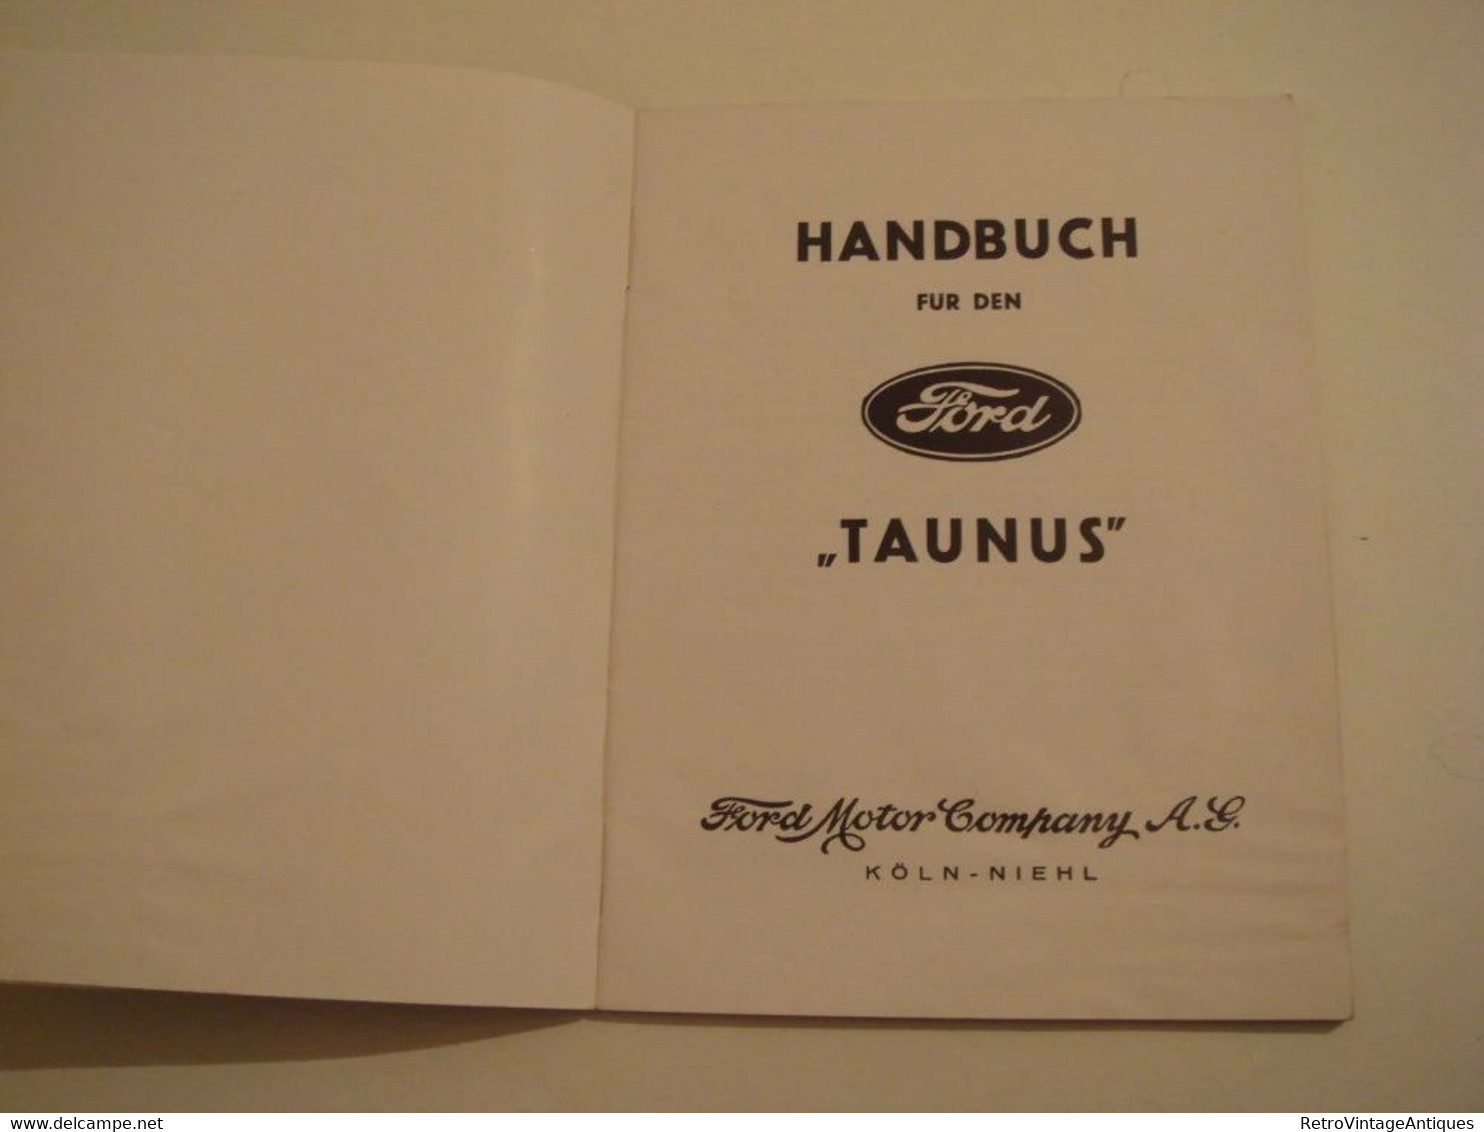 Vintage Auto Handbook Handbuch Fur Den Ford '' Taunus '' Ford Motor Company 1939 Car Manual Specifications Koln-niehl - Técnico